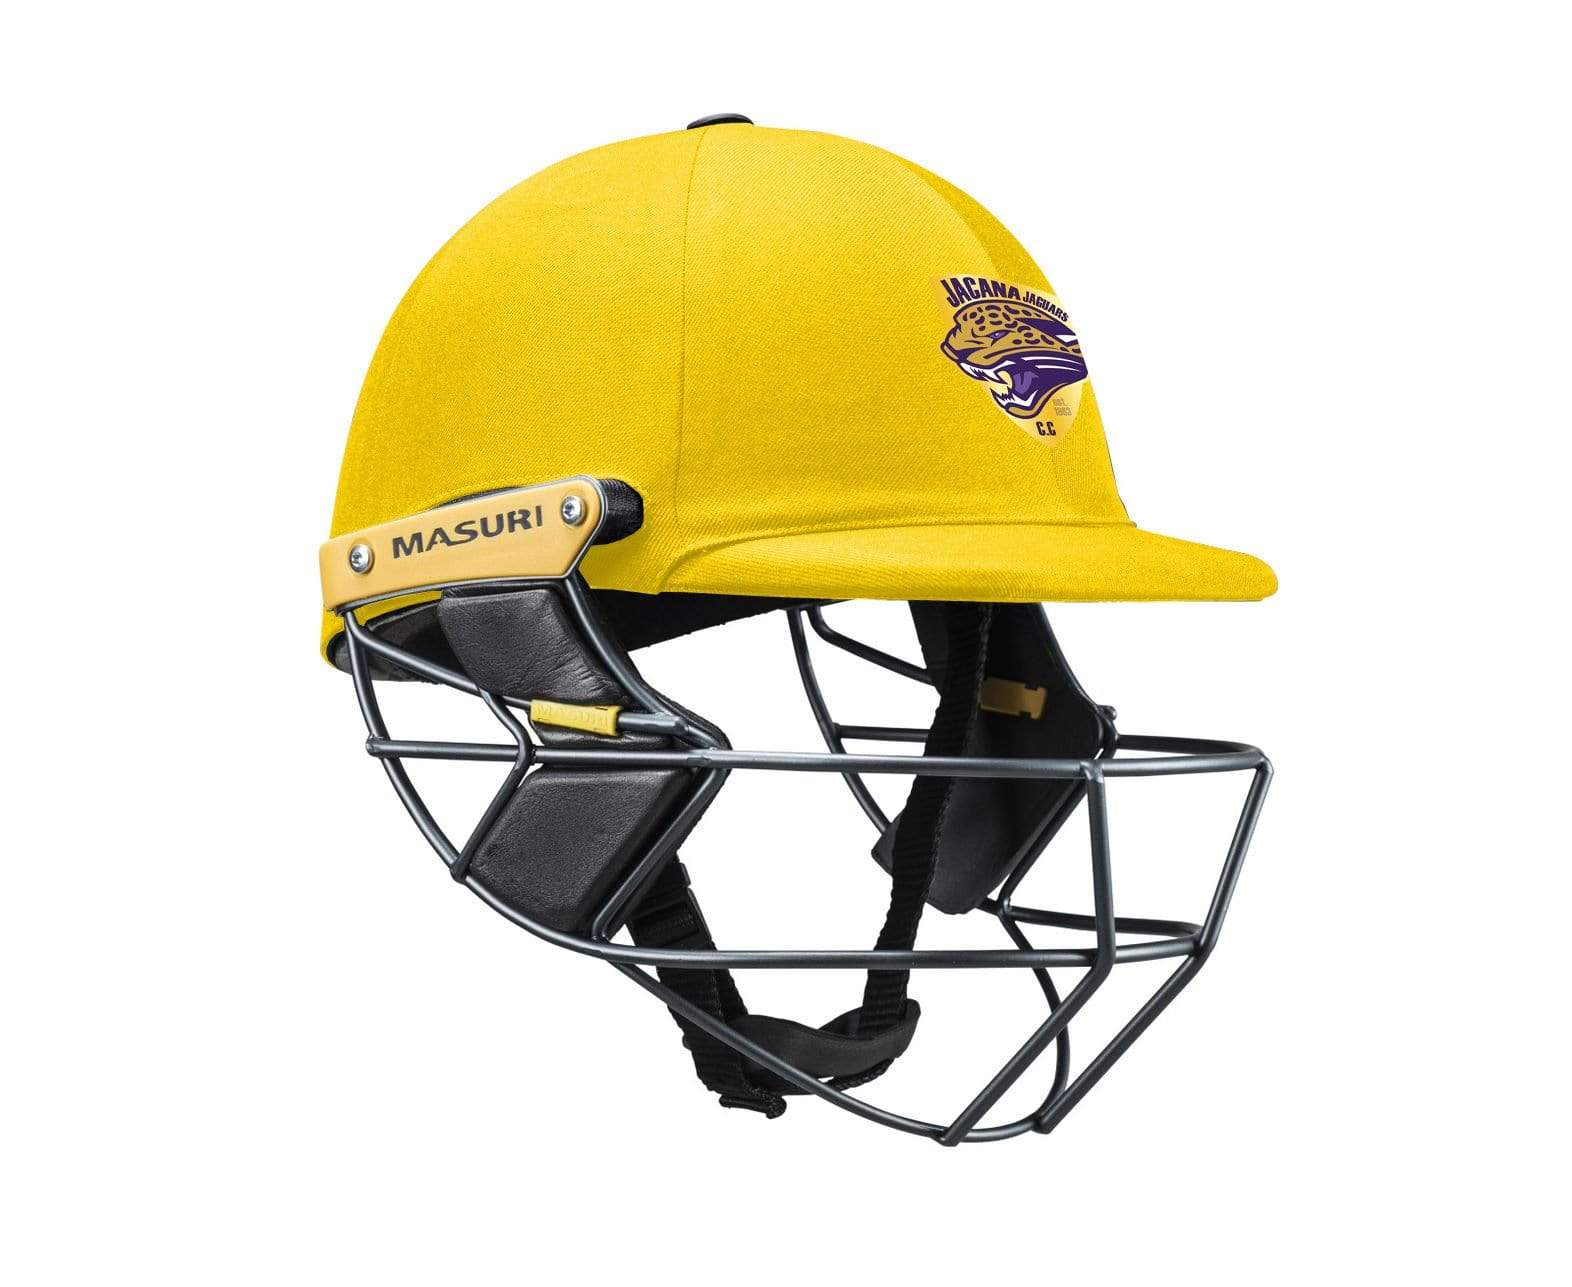 Masuri Club Helmet Jacana Cricket Club Helmet